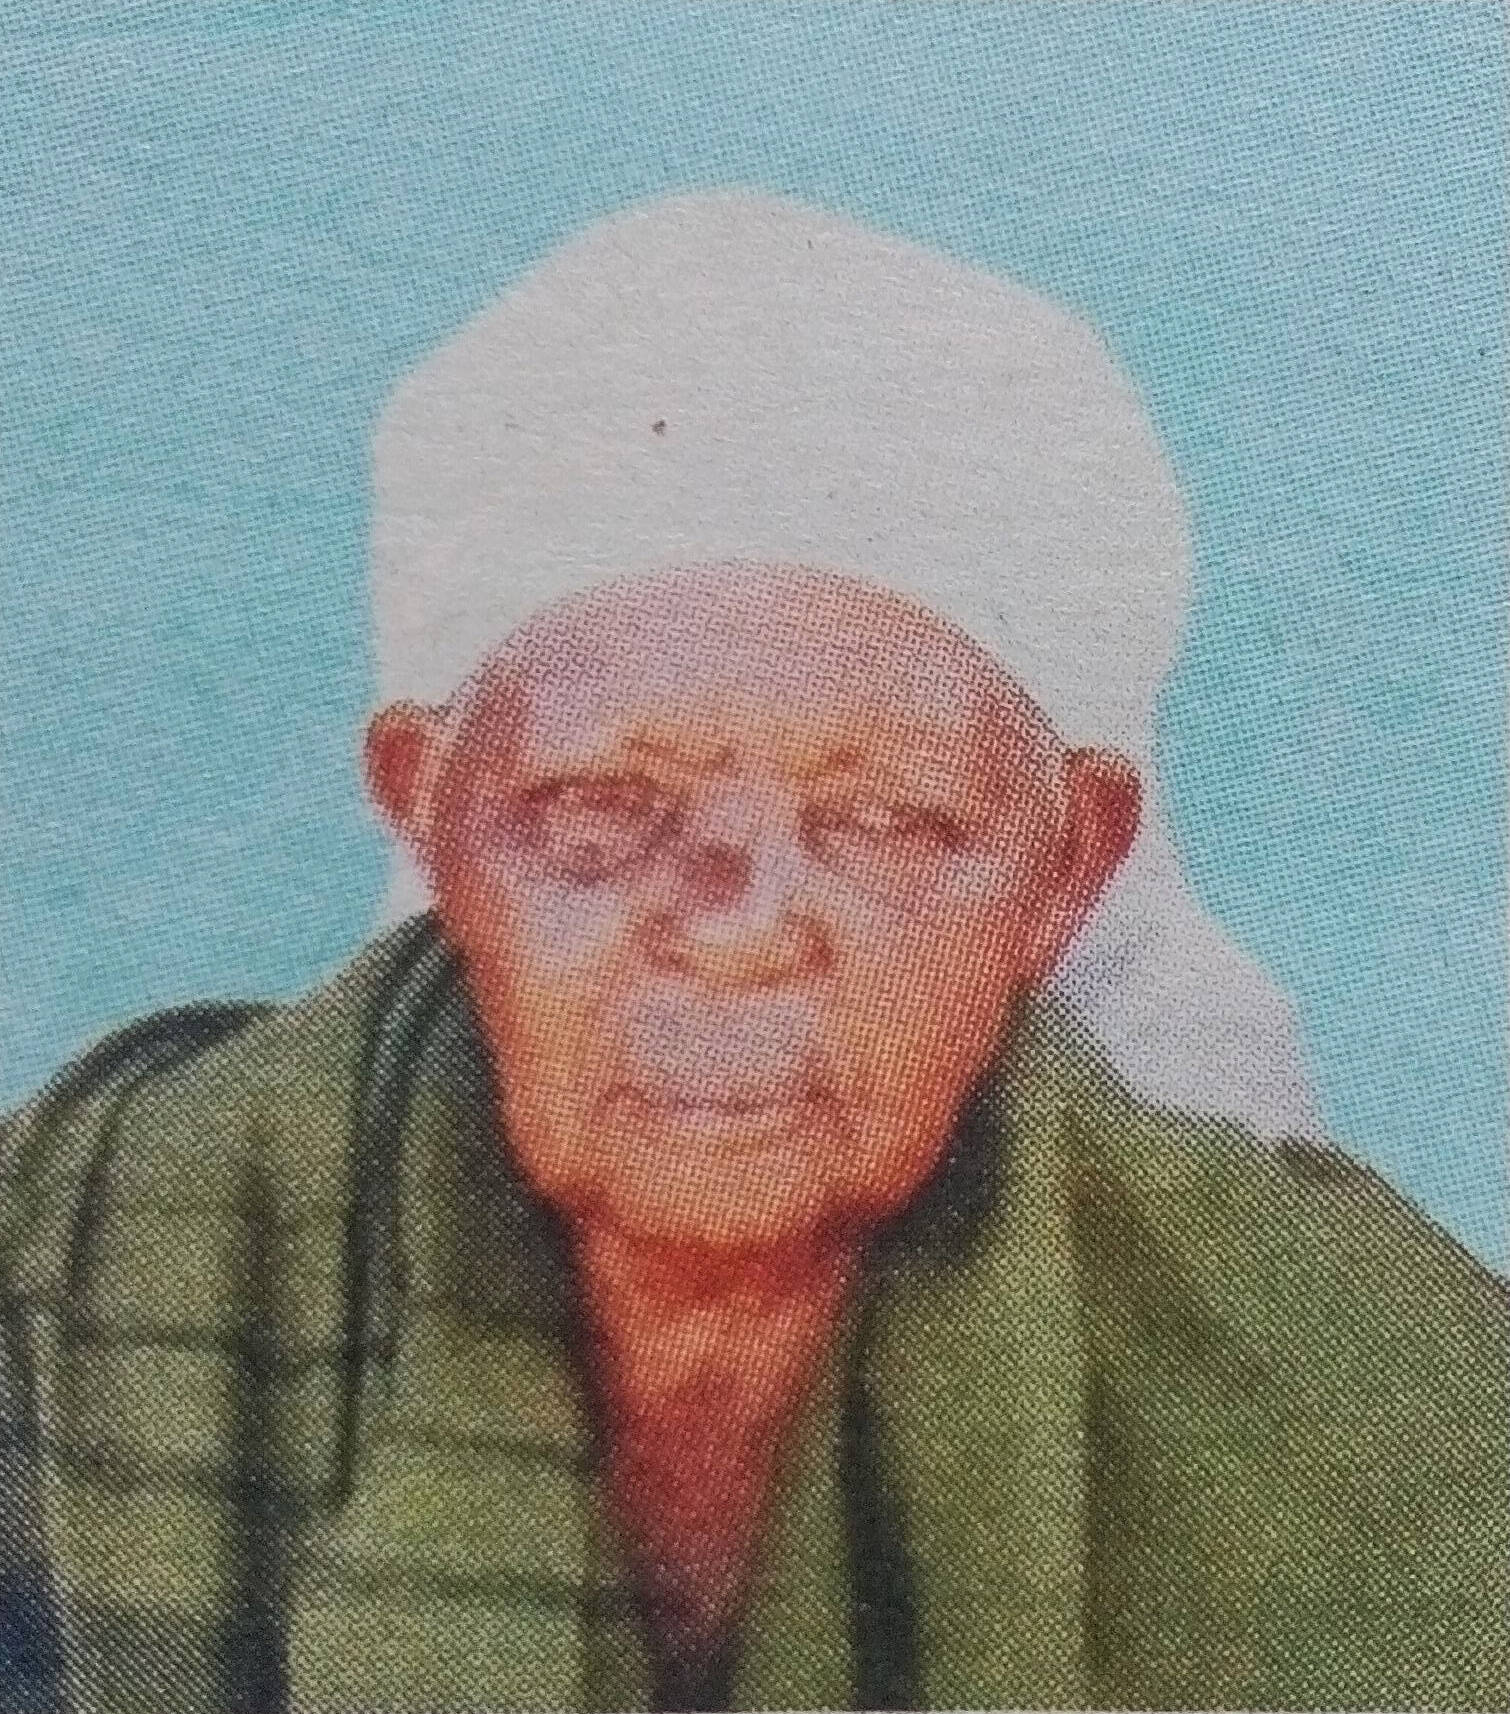 Obituary Image of Mama Mary Kakui Mutisya